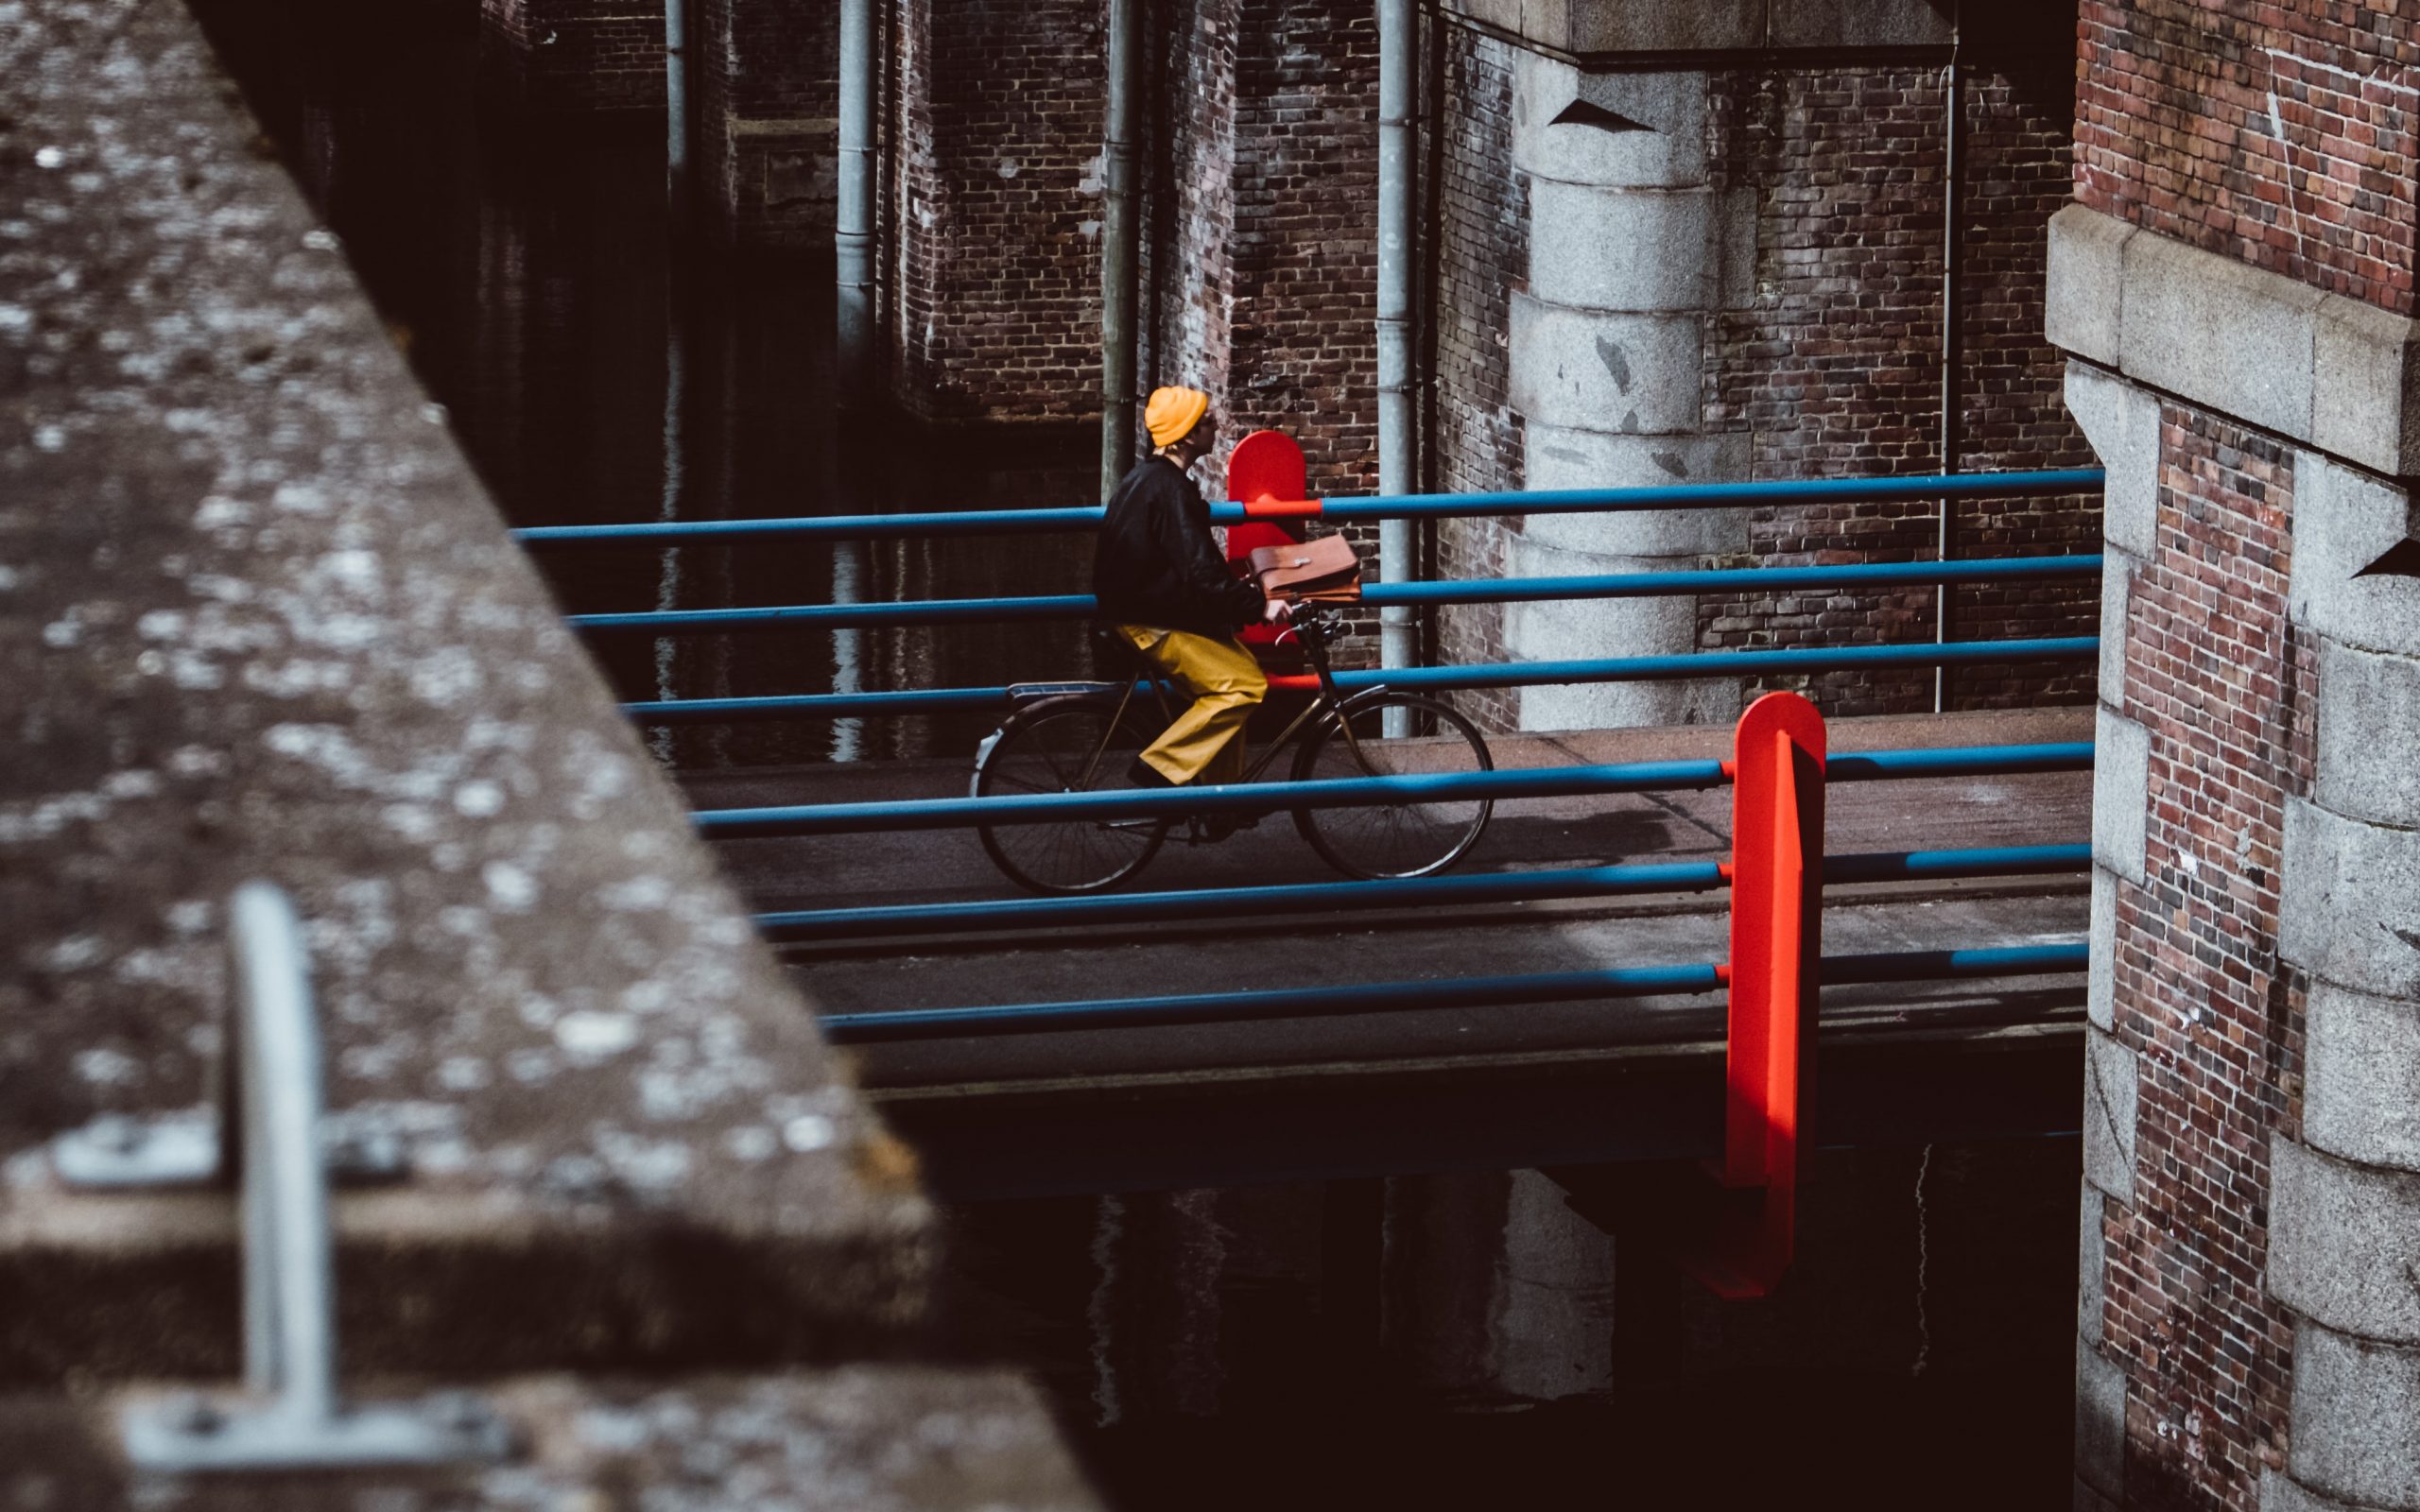 Riding a bike over an urban bridge between buildings